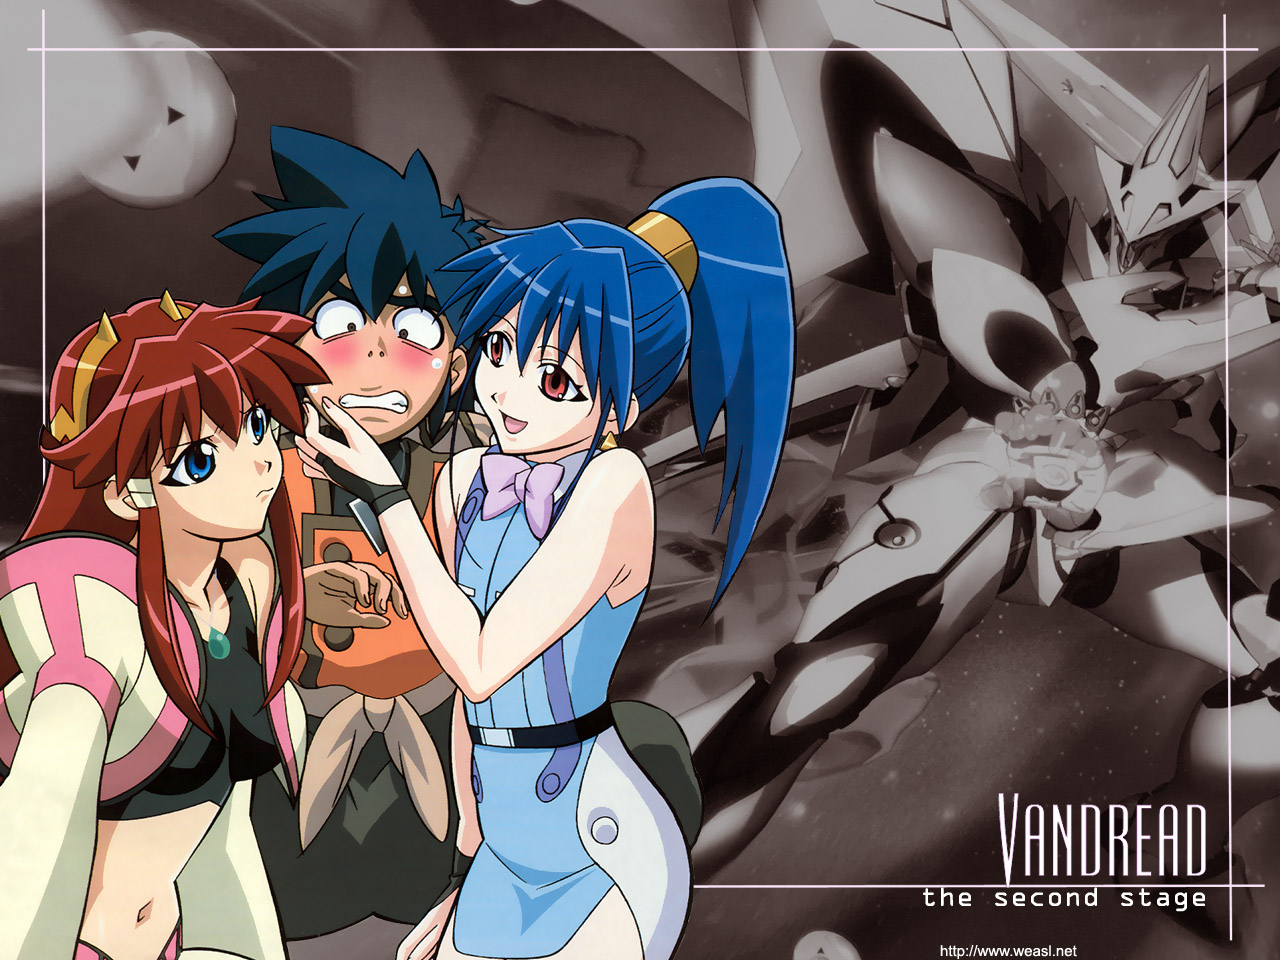 Download High quality Vandread wallpaper / Anime / 1280x960